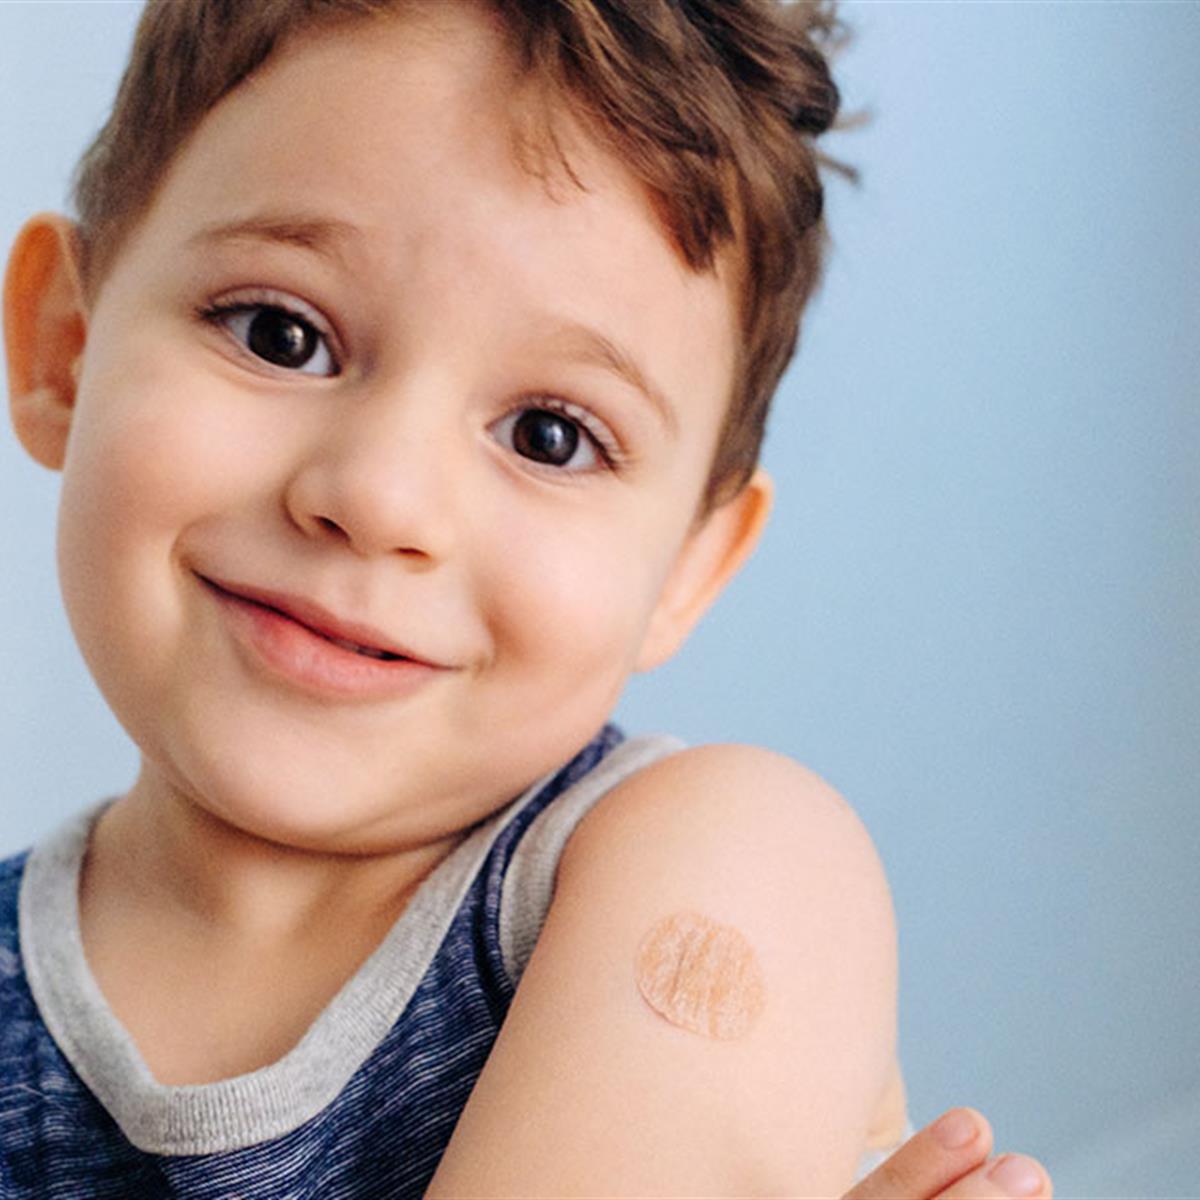 Factsheet: How to Make Vaccination Sensory-Friendly